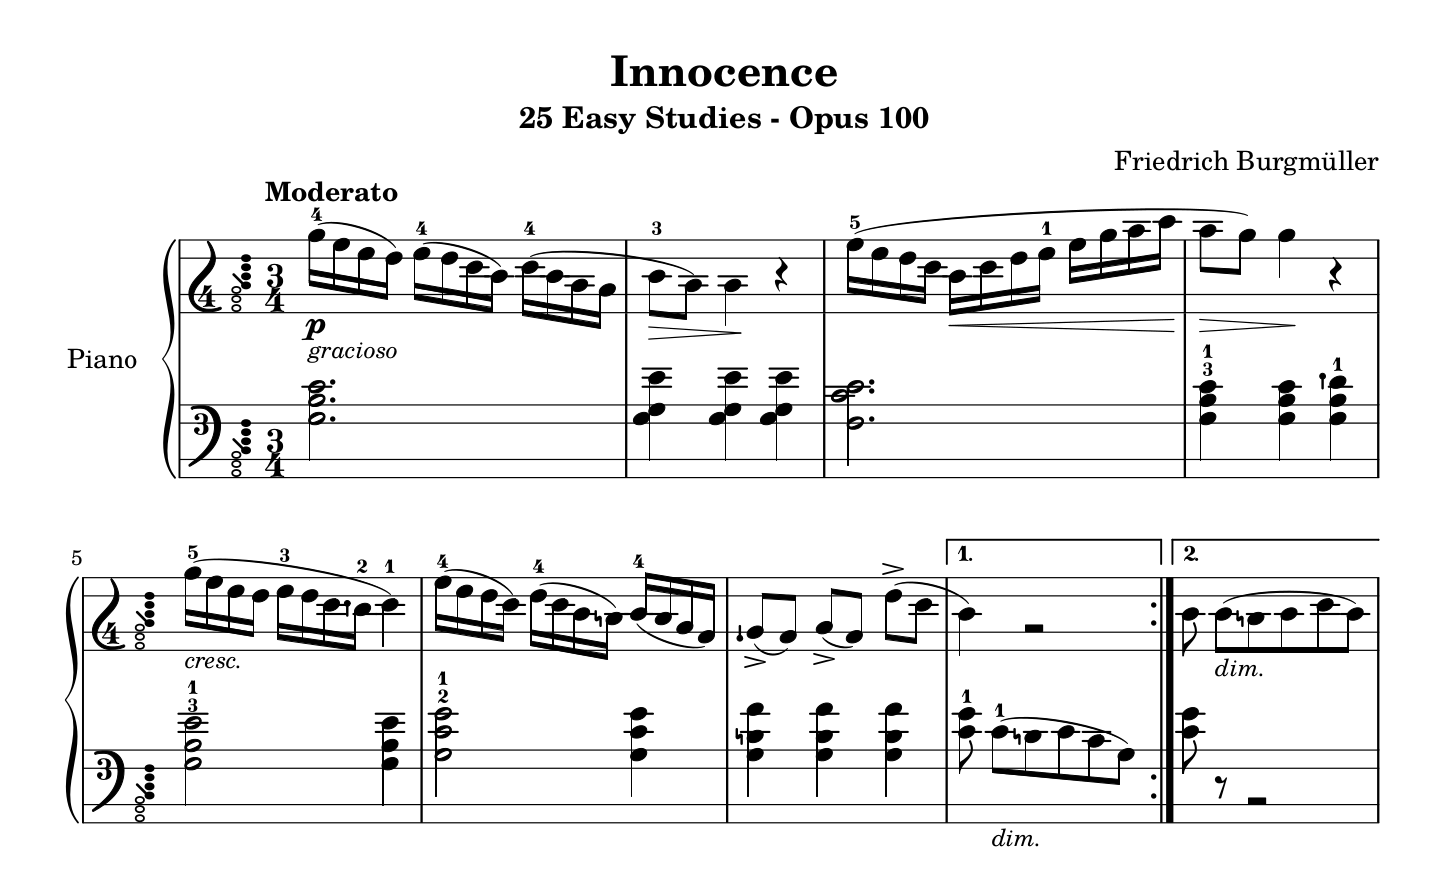 Burgmüller's Innocence in Clairnote SN